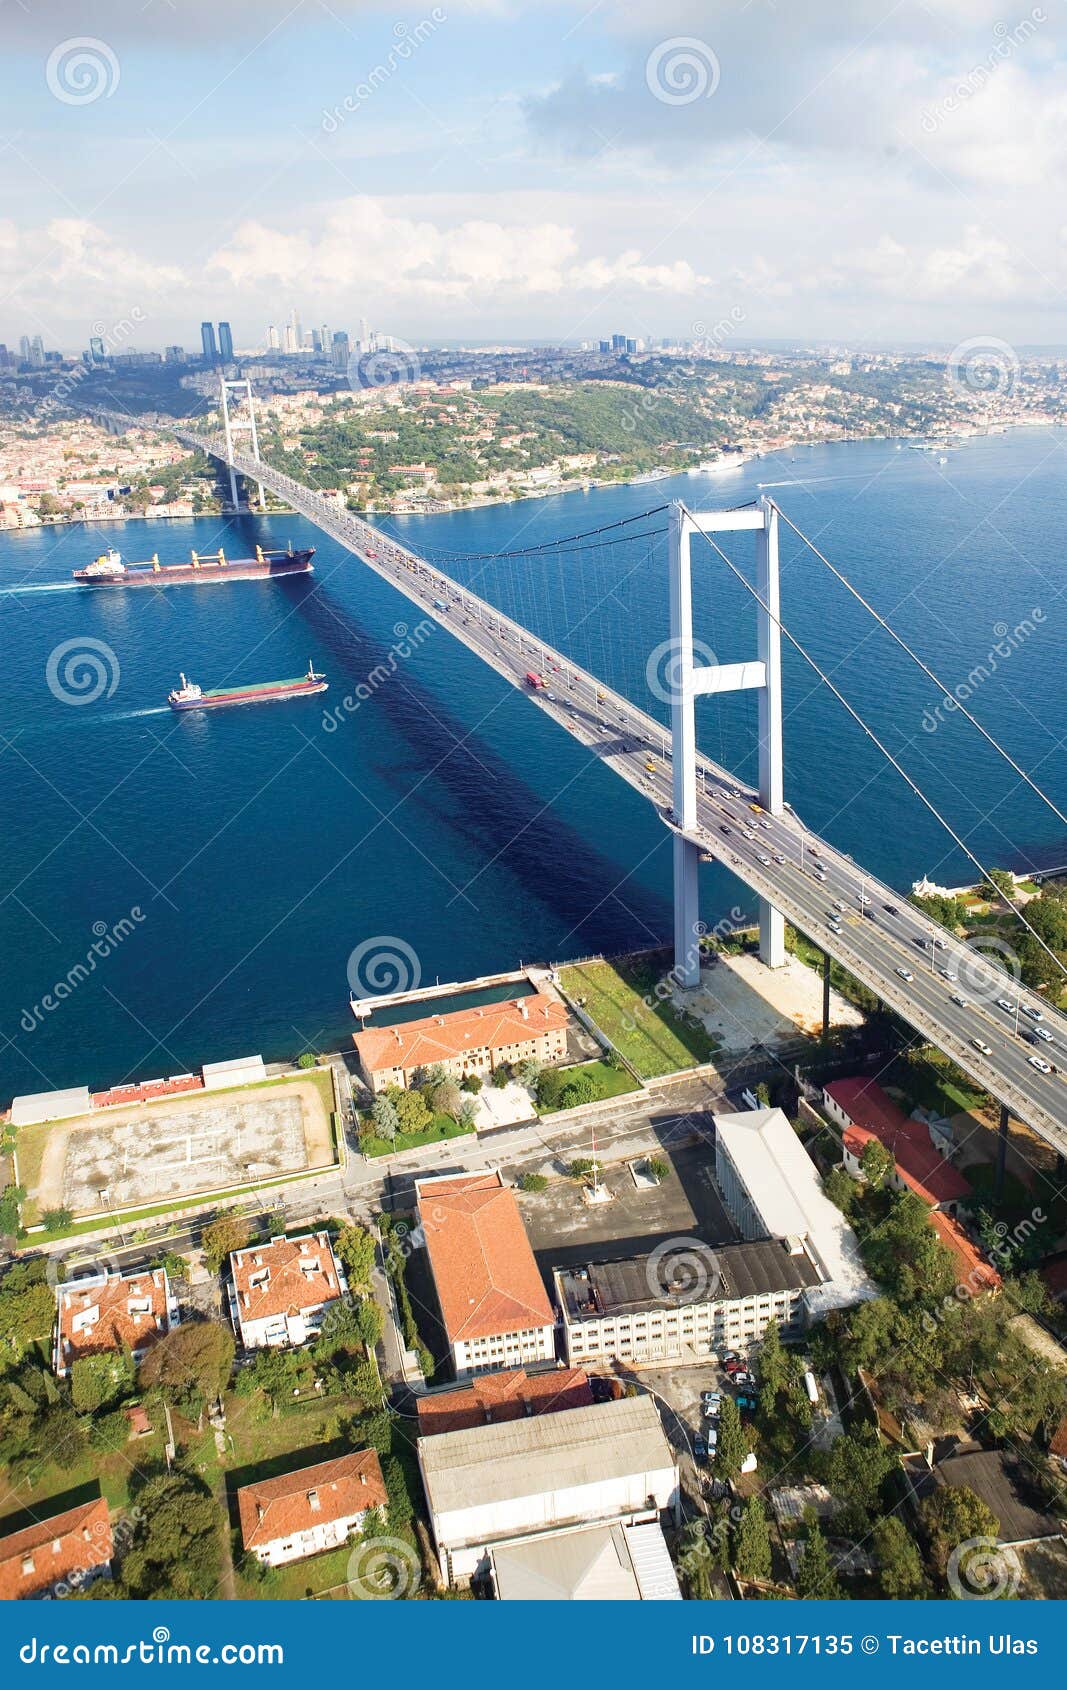 bosphorus bridge istanbul turkey